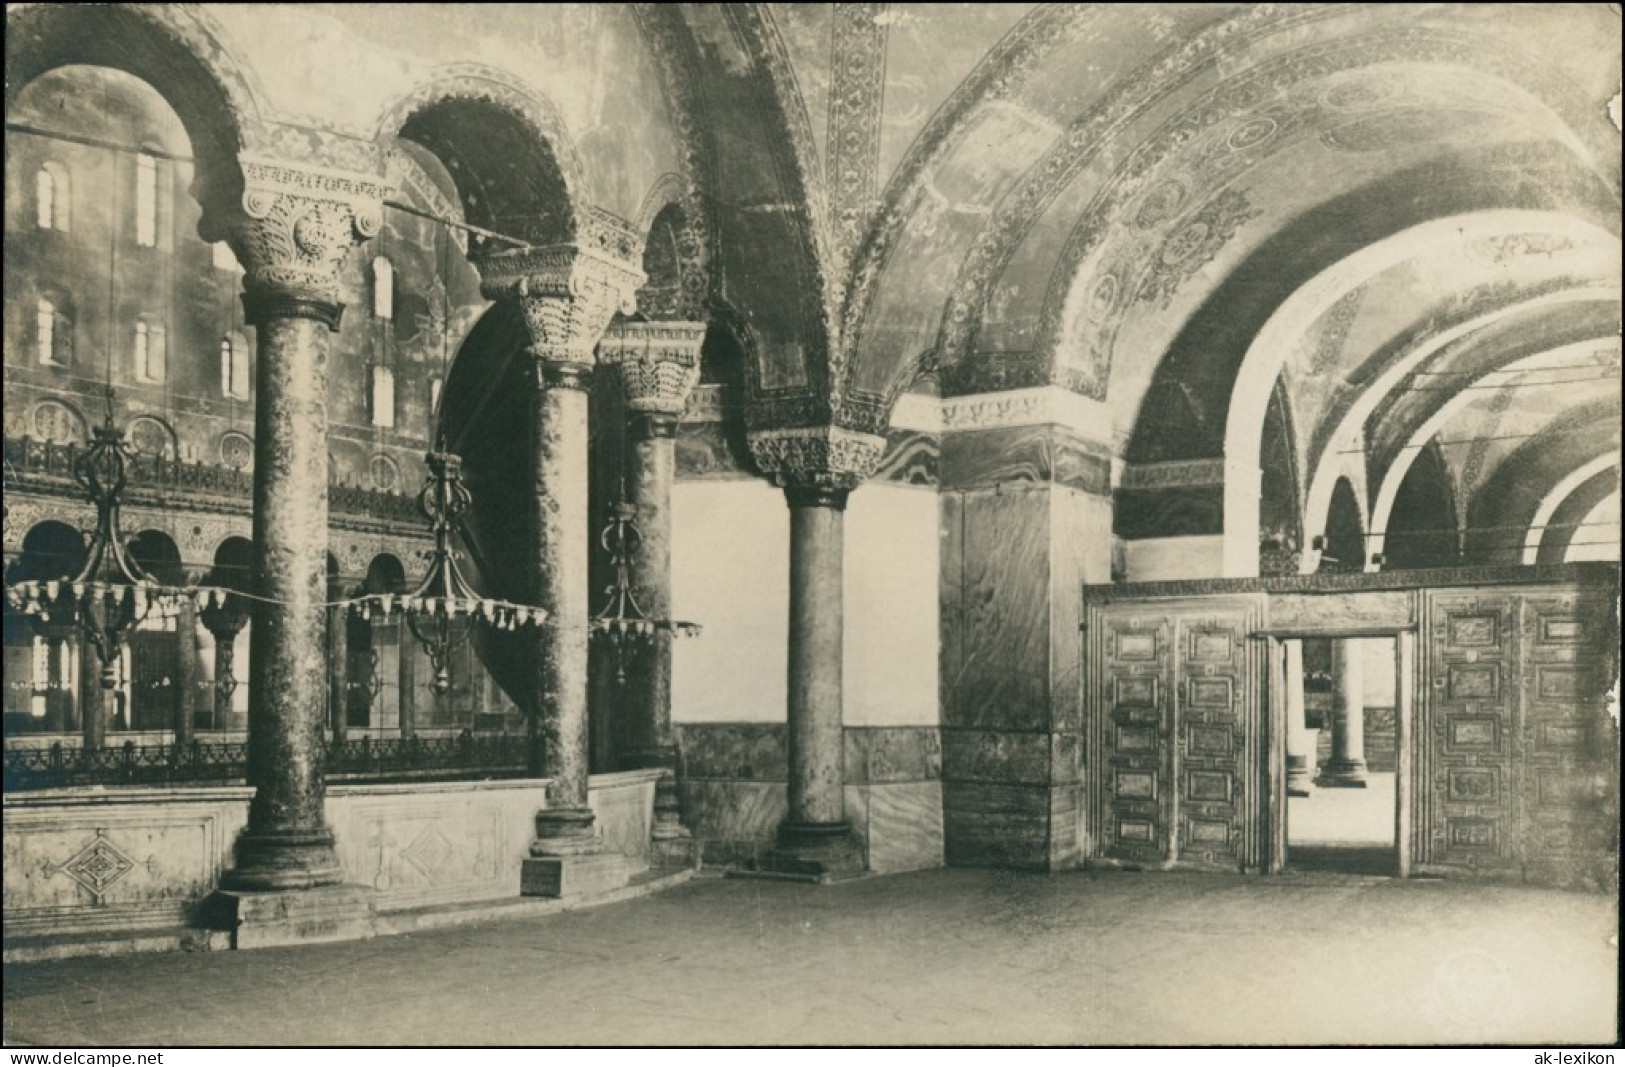 Postcard Sofia София Kirche - Innenansicht 1928 - Bulgarie